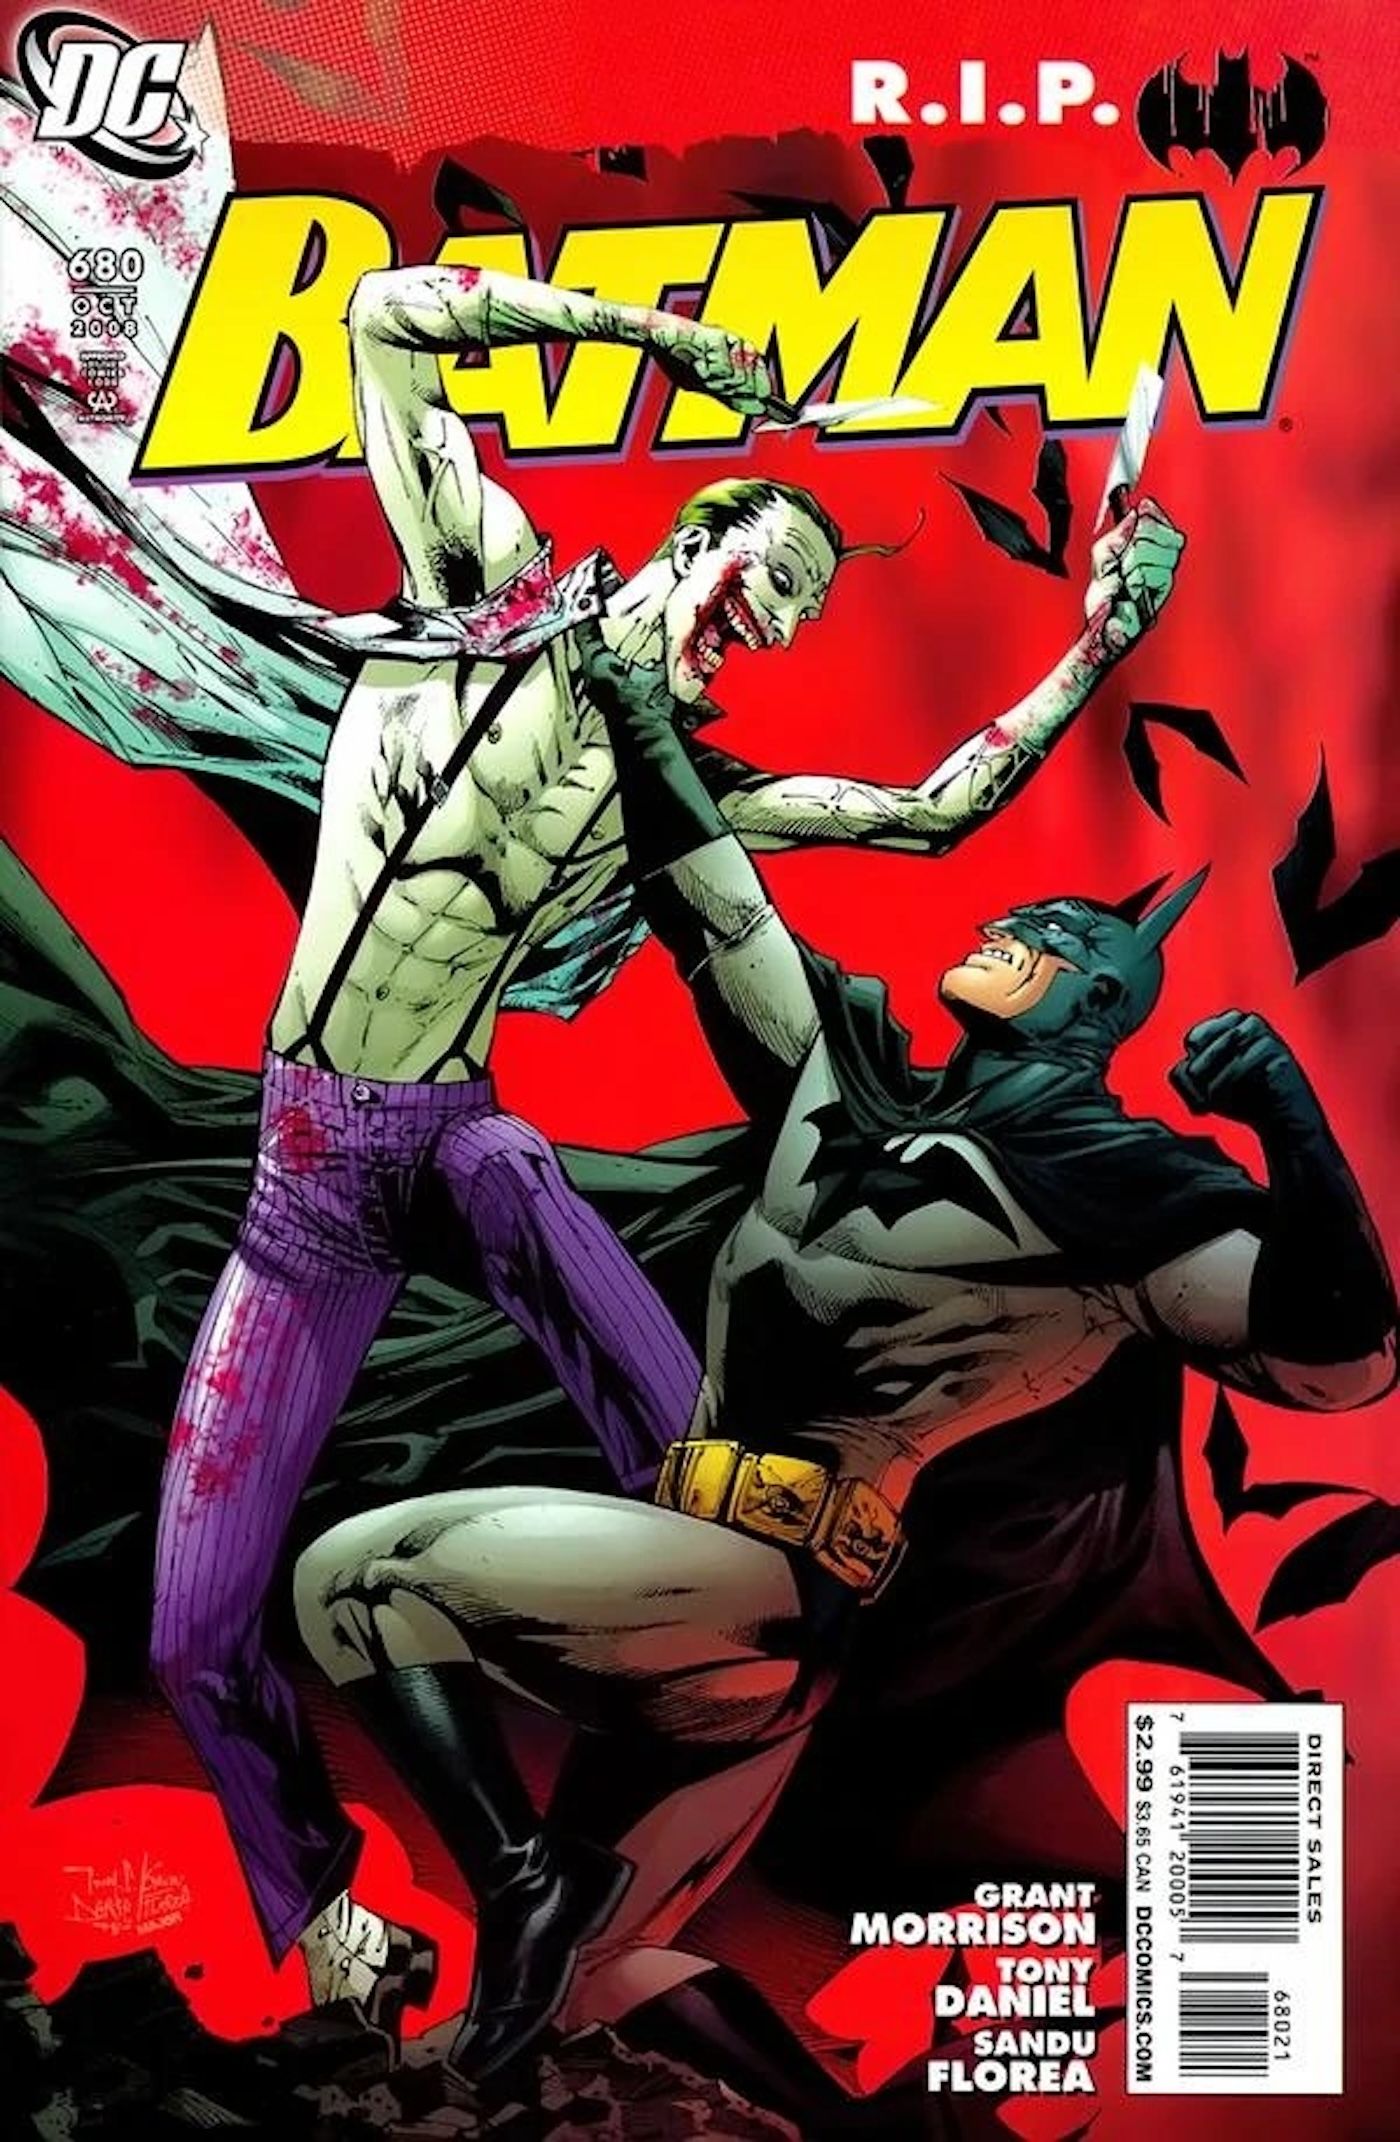 Capa variante do Batman 680: Batman segurando o Coringa pela garganta.